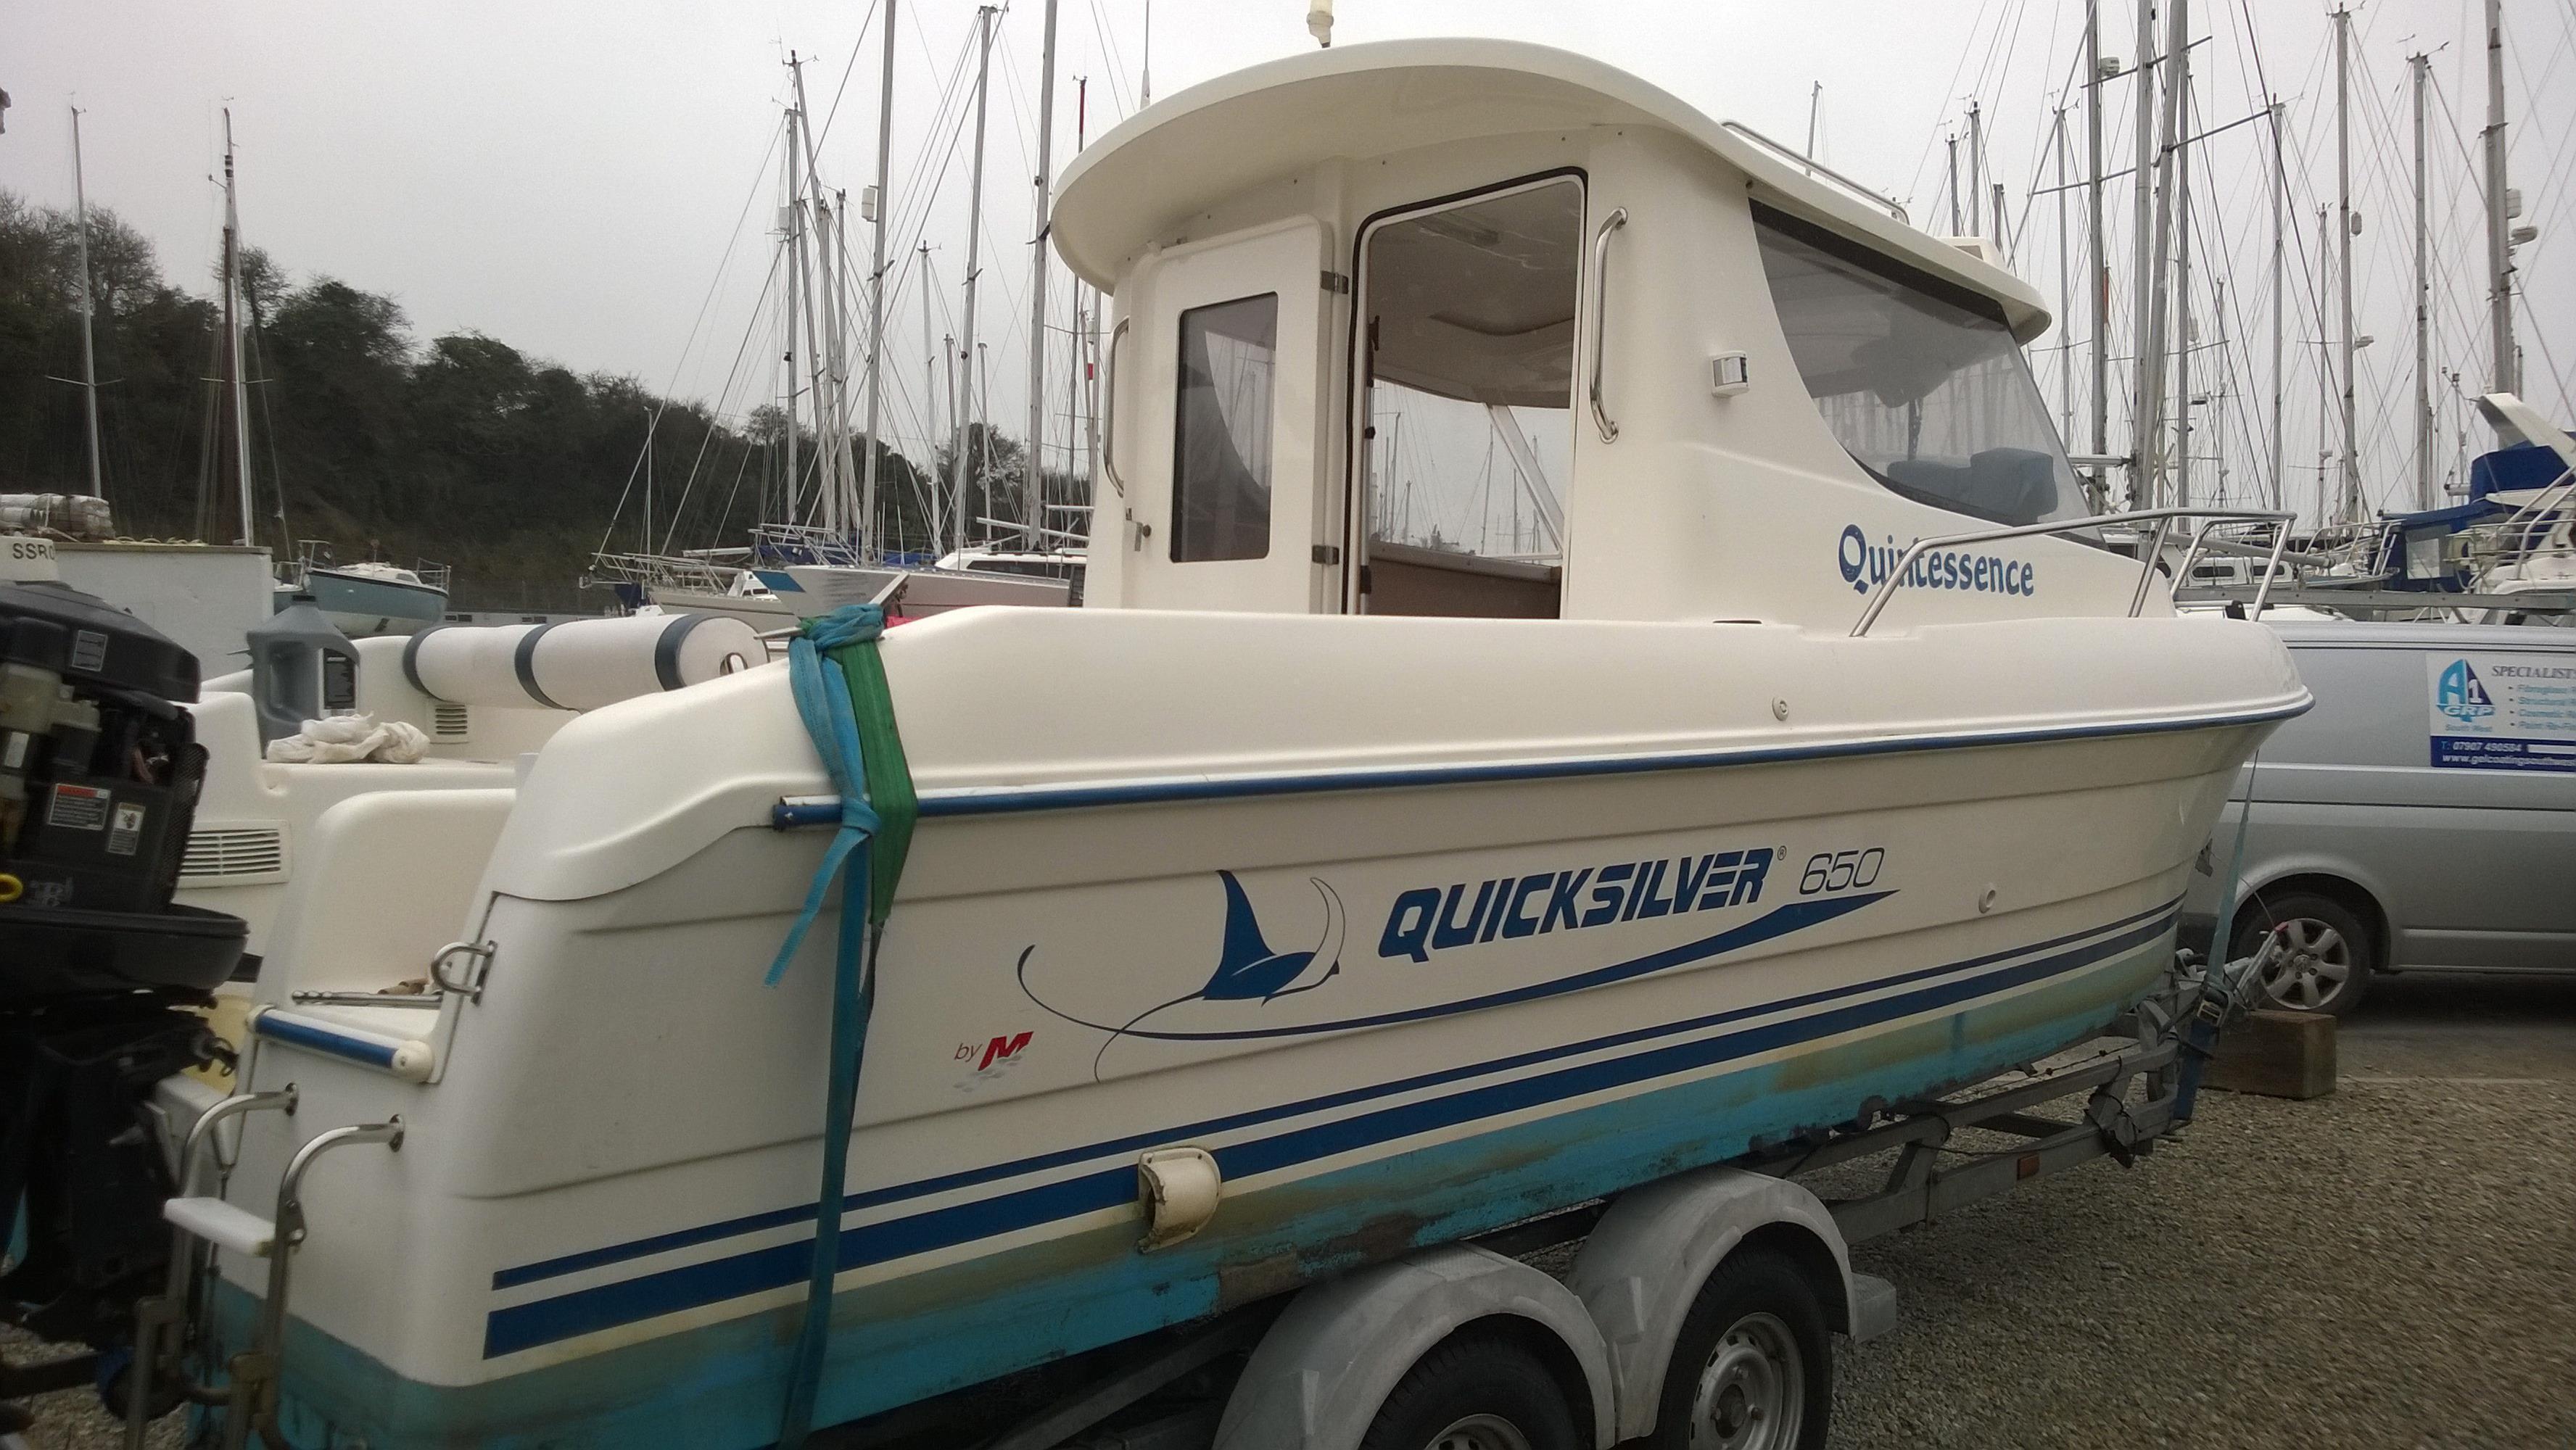 Quicksilver 650, Plymouth, Devon